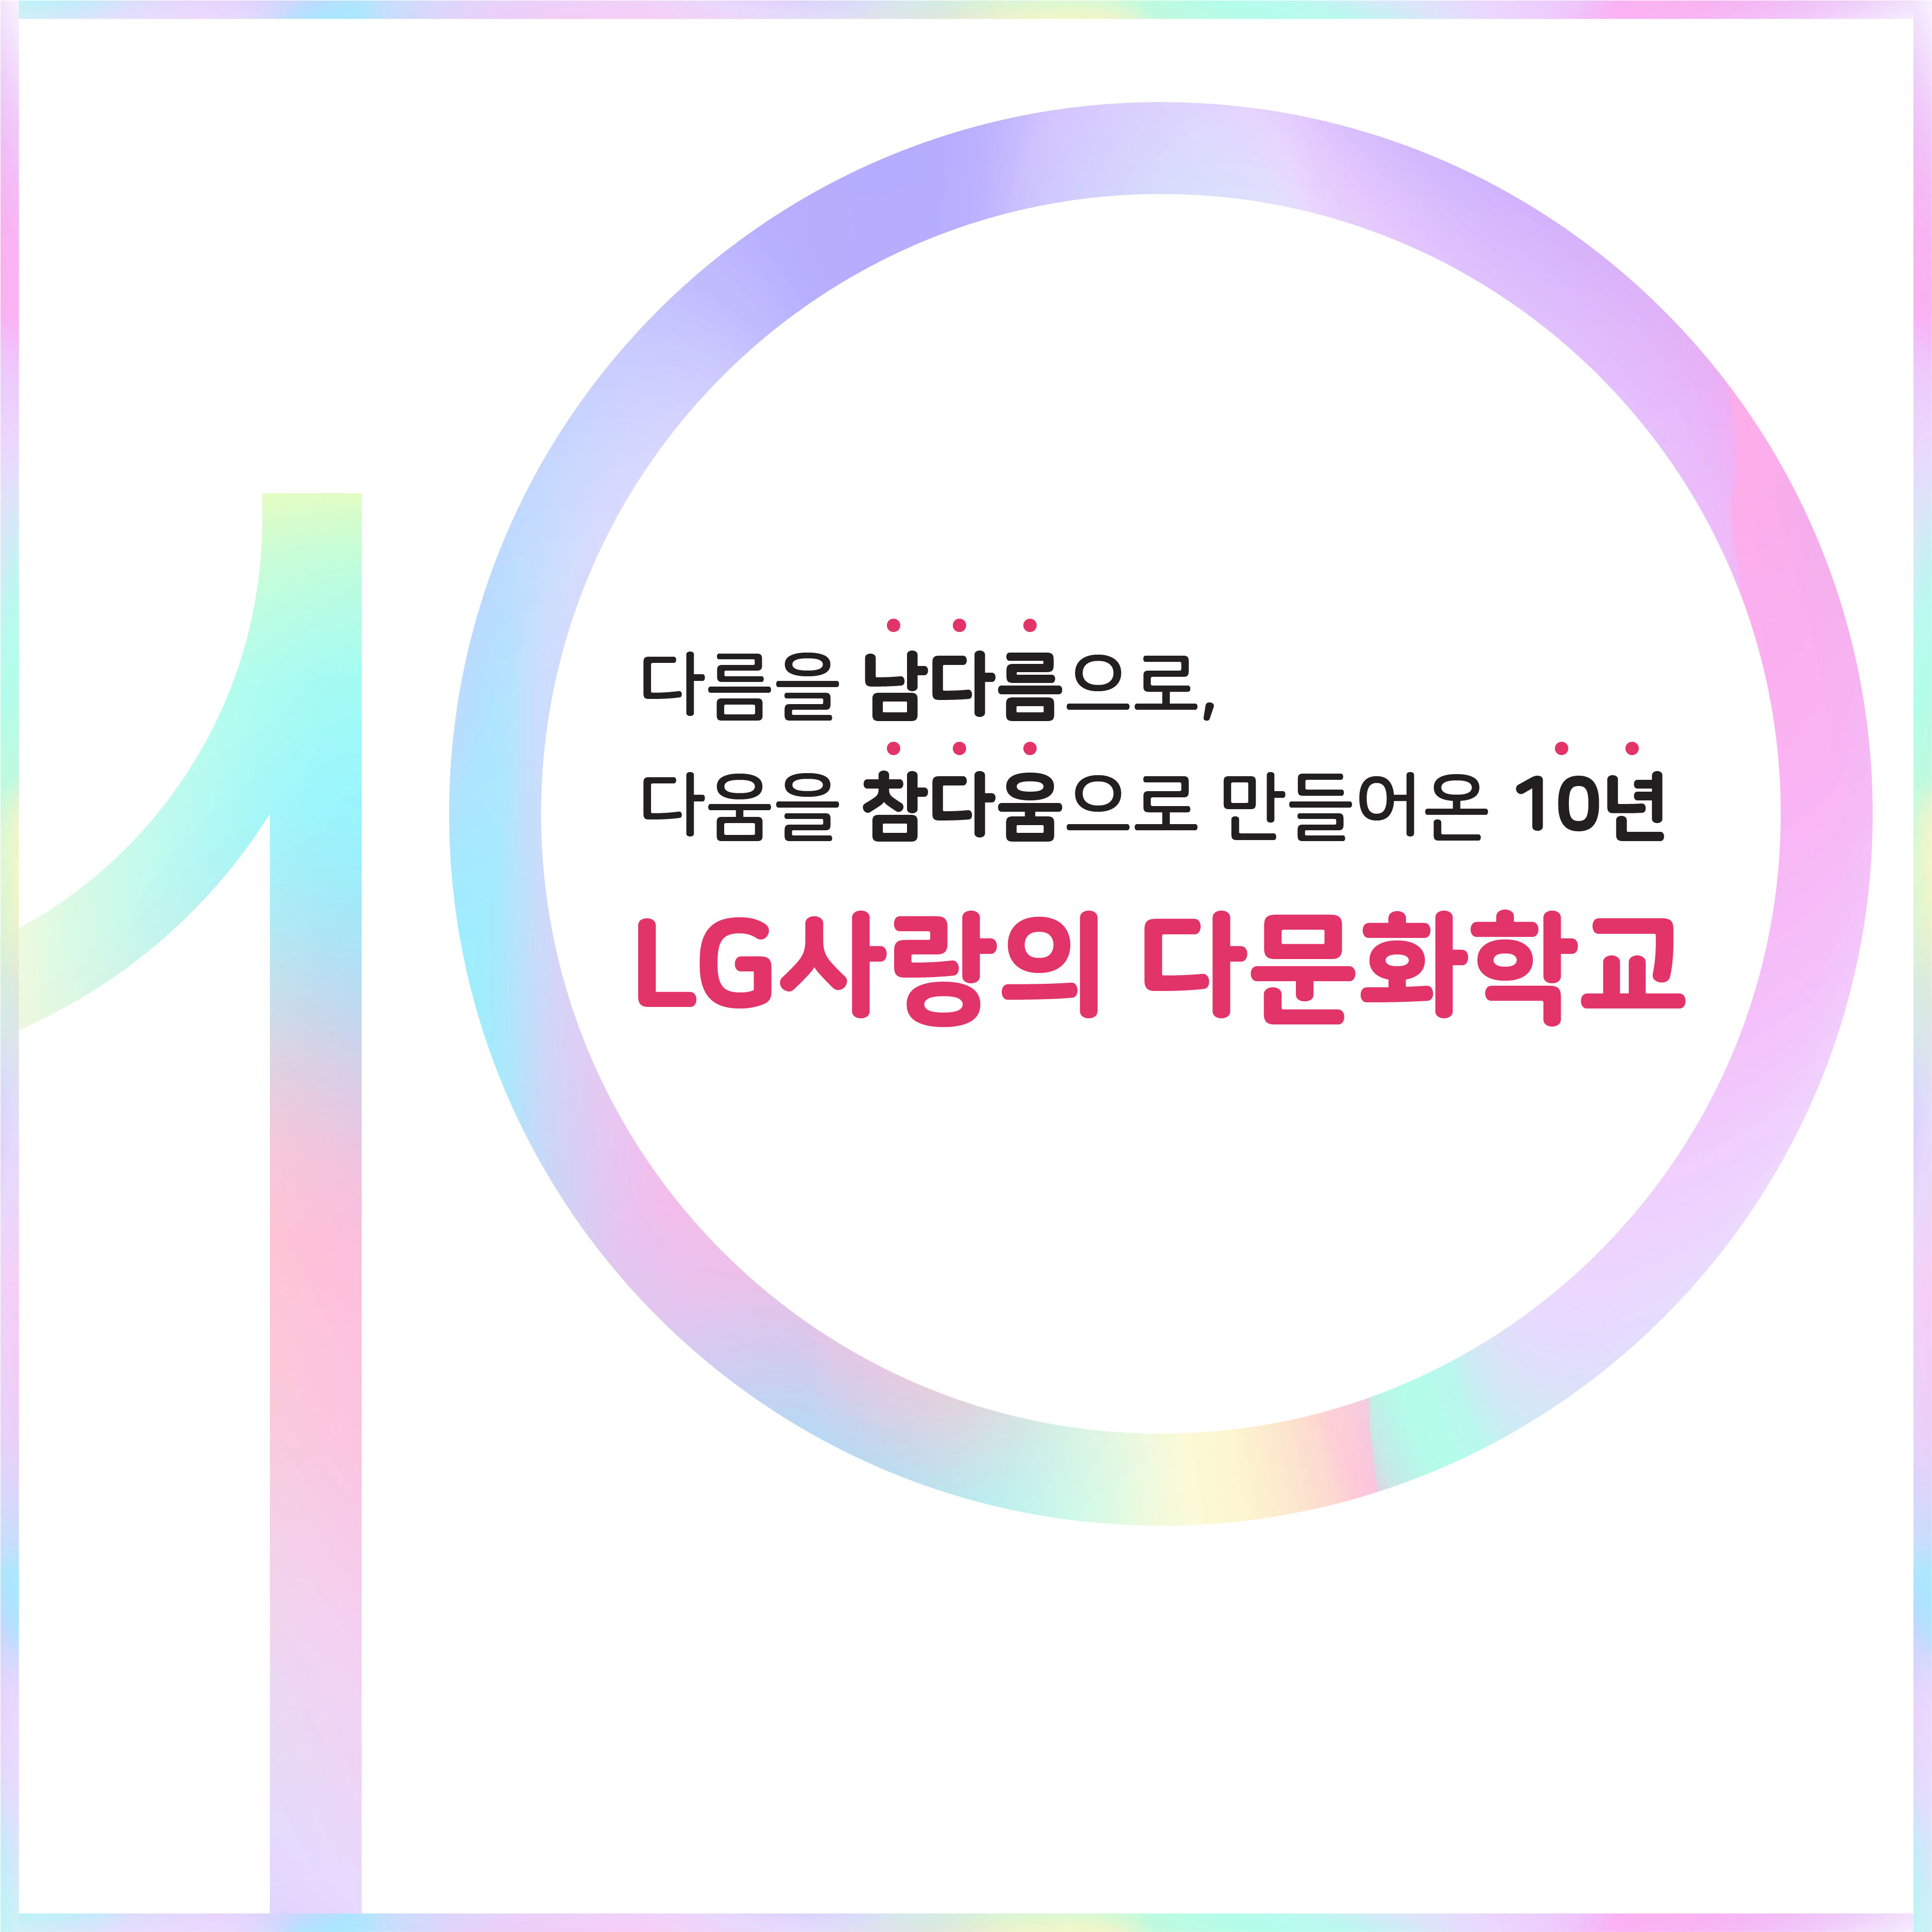 LG와 함께하는 사랑의 다문화 학교 10주년 성과집 발간